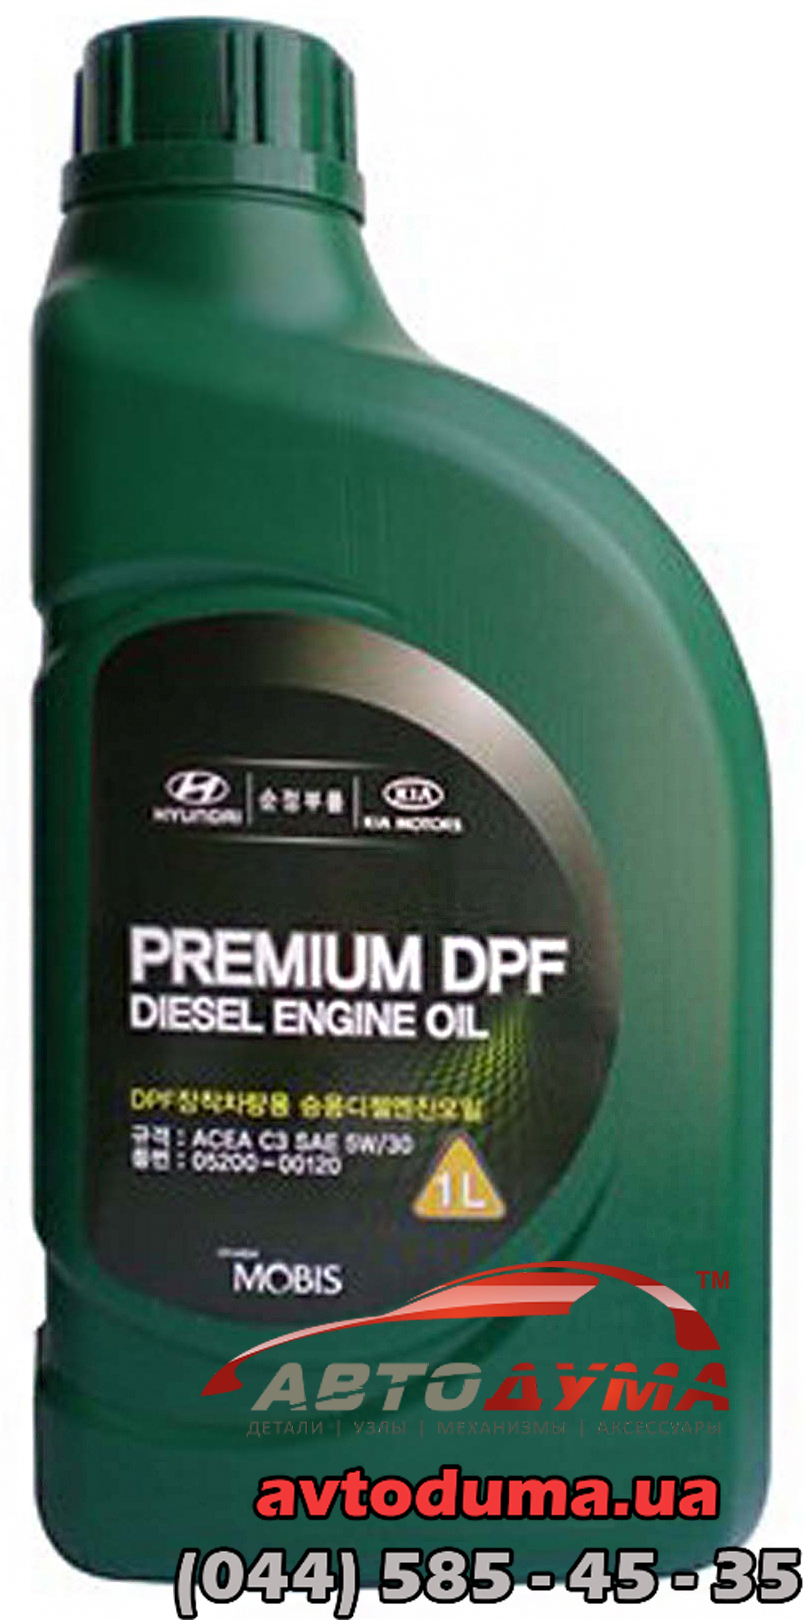 Hyundai Premium DPF Diesel 5W-30, 1л